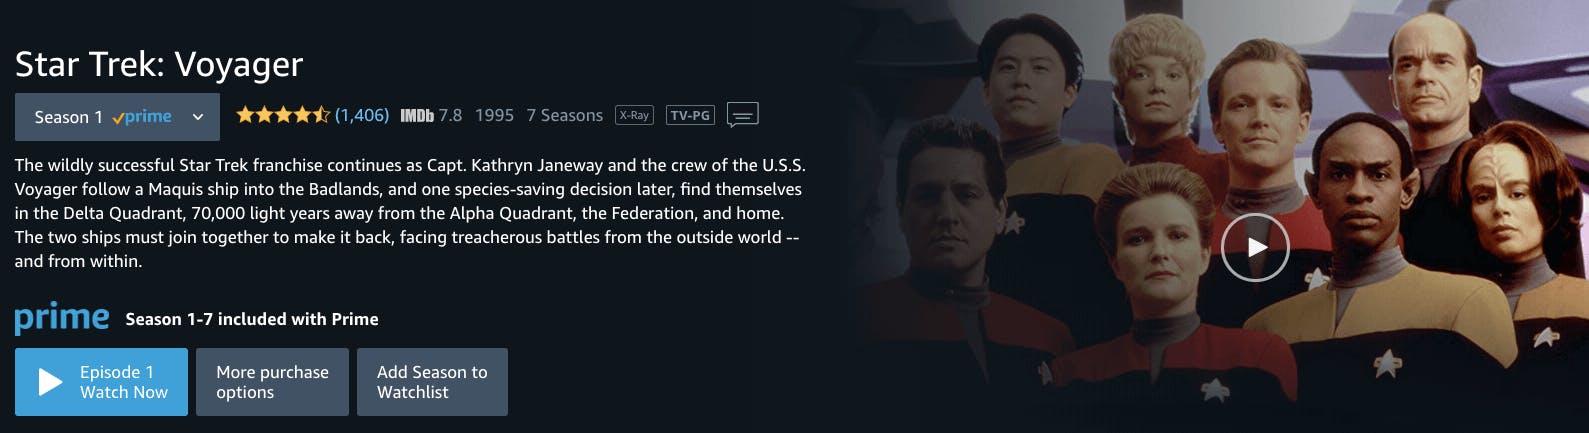 watch Star Trek voyager on Amazon Prime